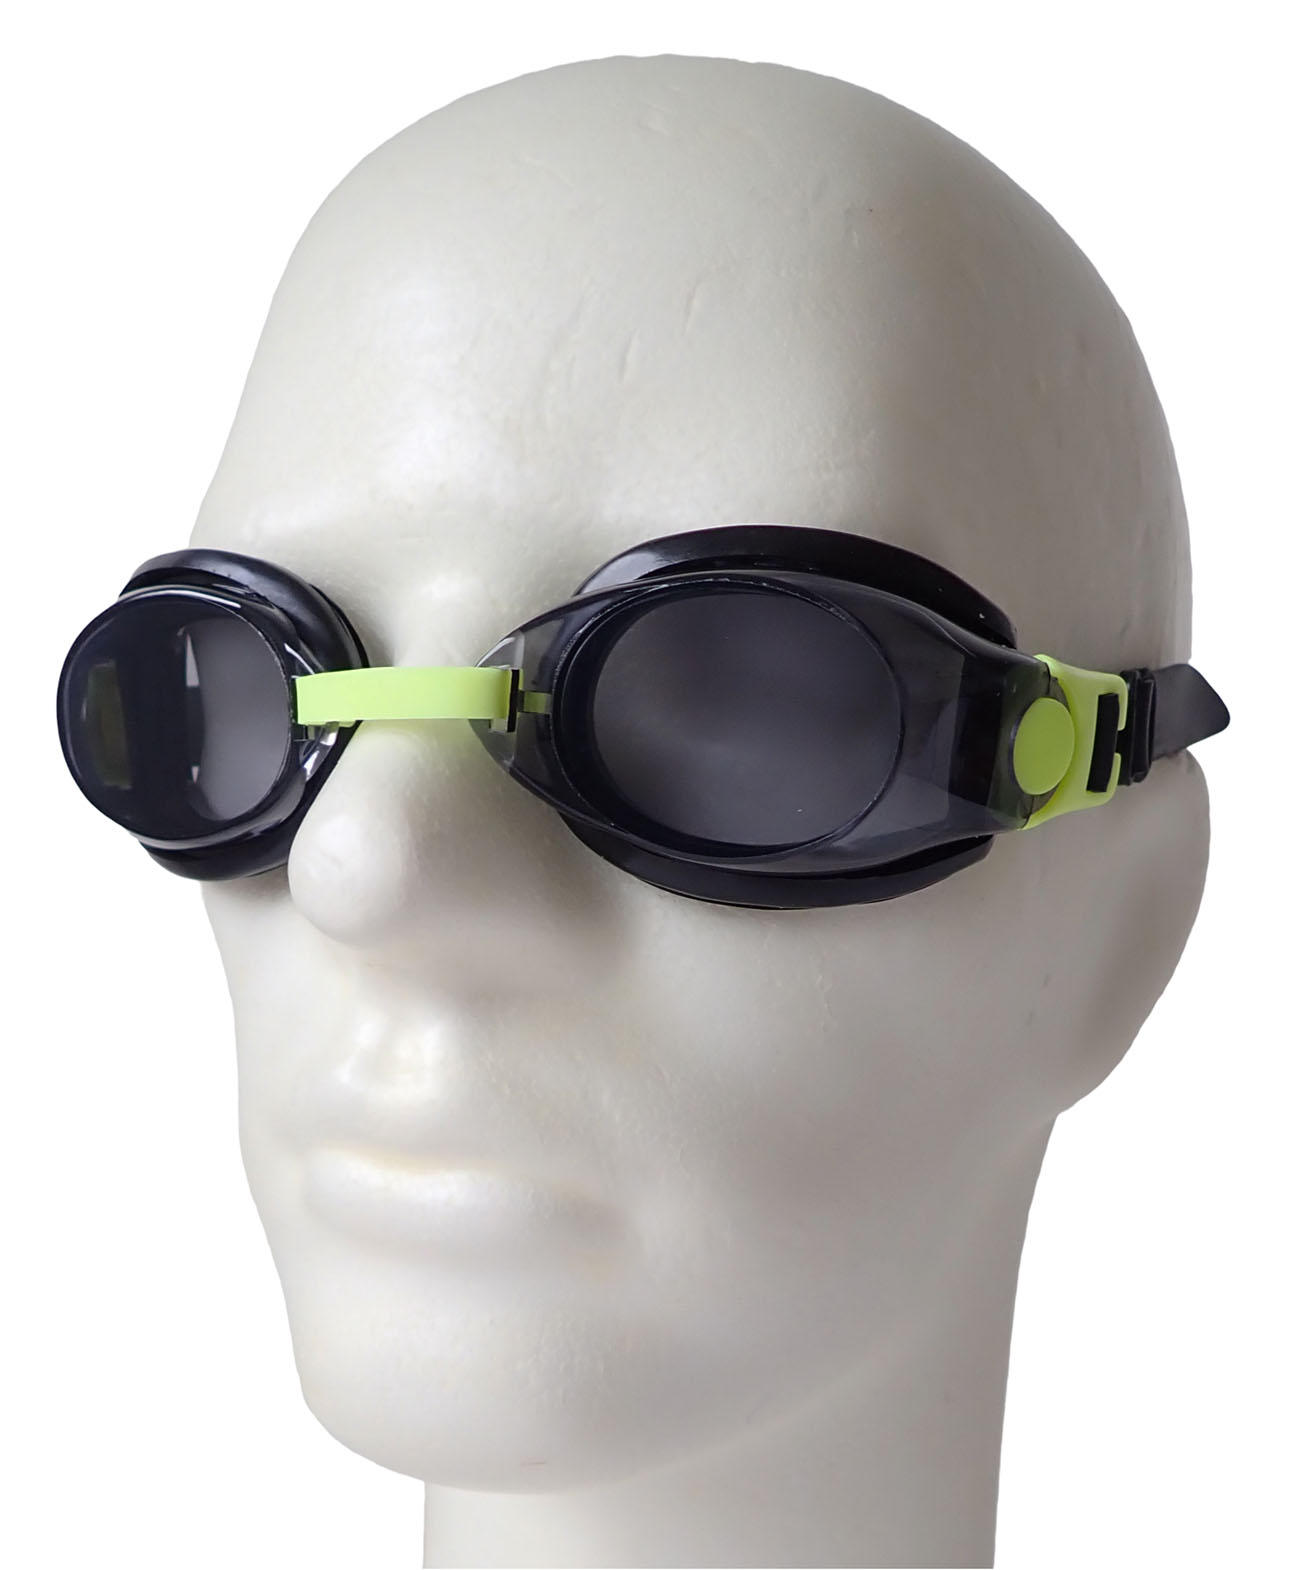 Plavecké brýle s Antifog úpravou - žluté